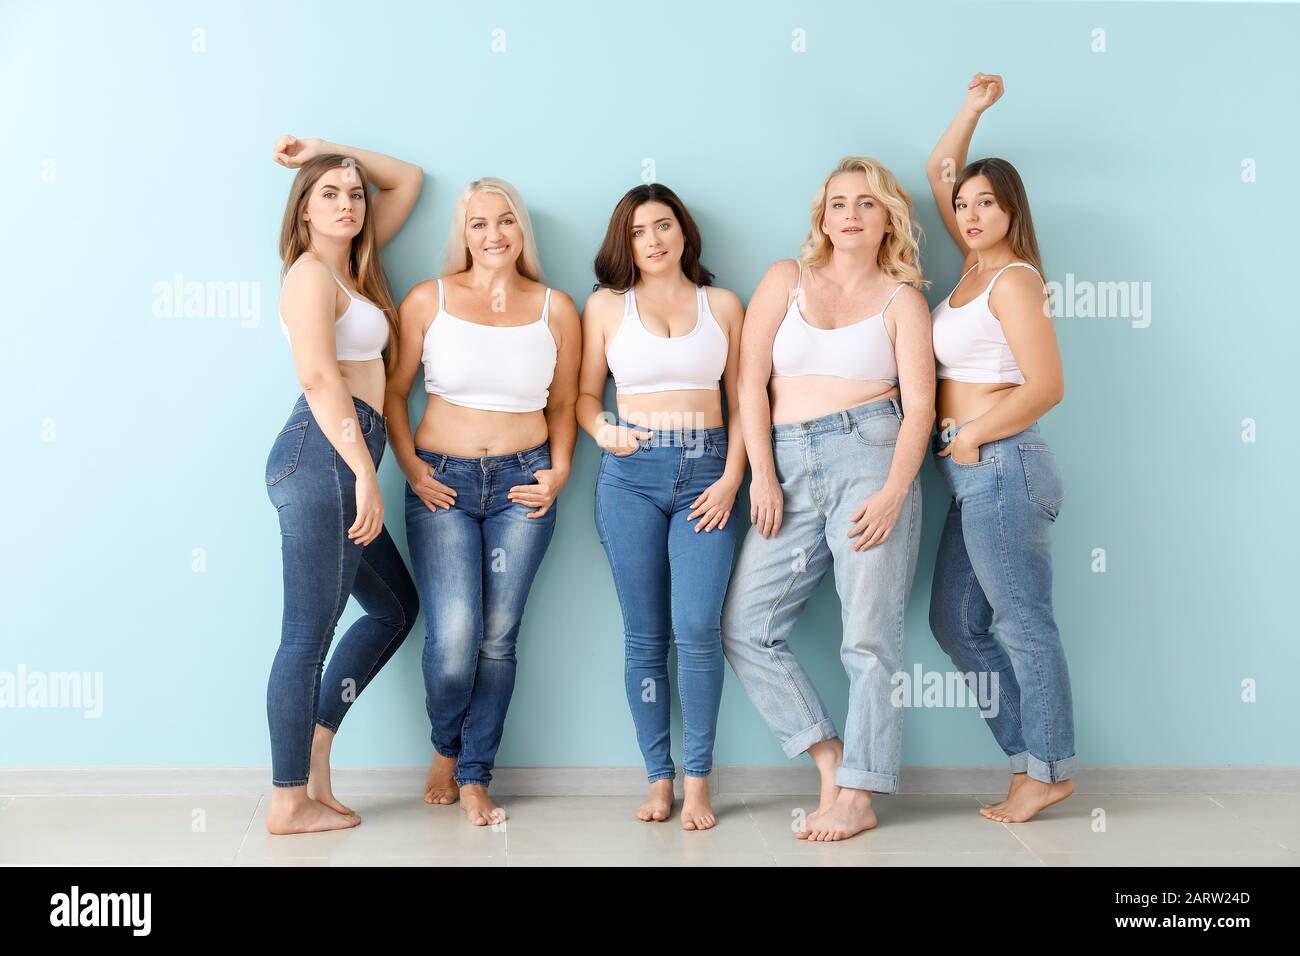 dainty feminie pose for plus size model - CLIP STUDIO ASSETS